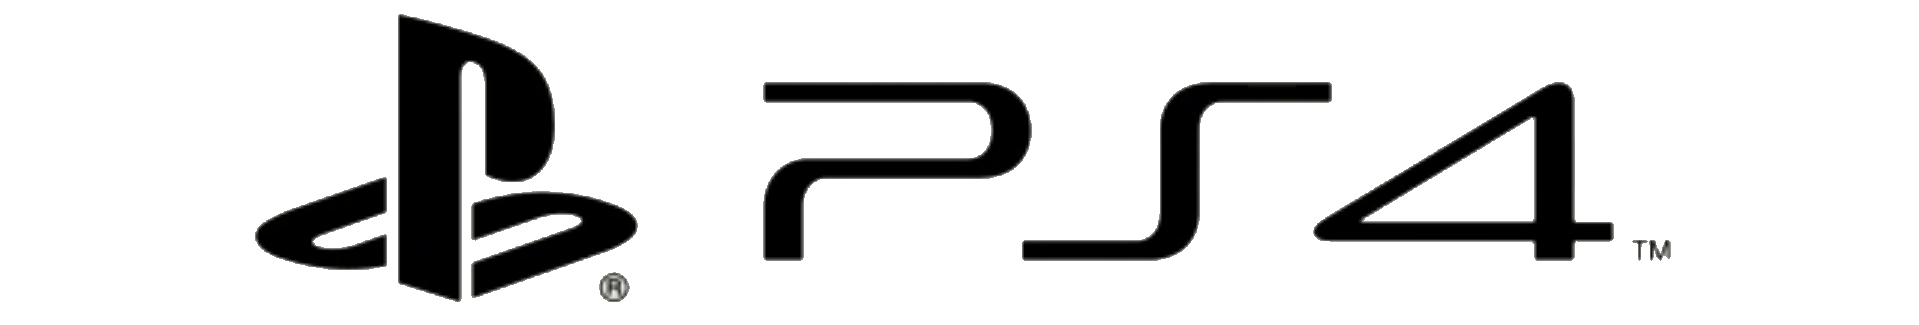 Sony PlayStation 4 Logo - E3 2013: Sony Press Conference - PlayStation 4 Console Reveal ...